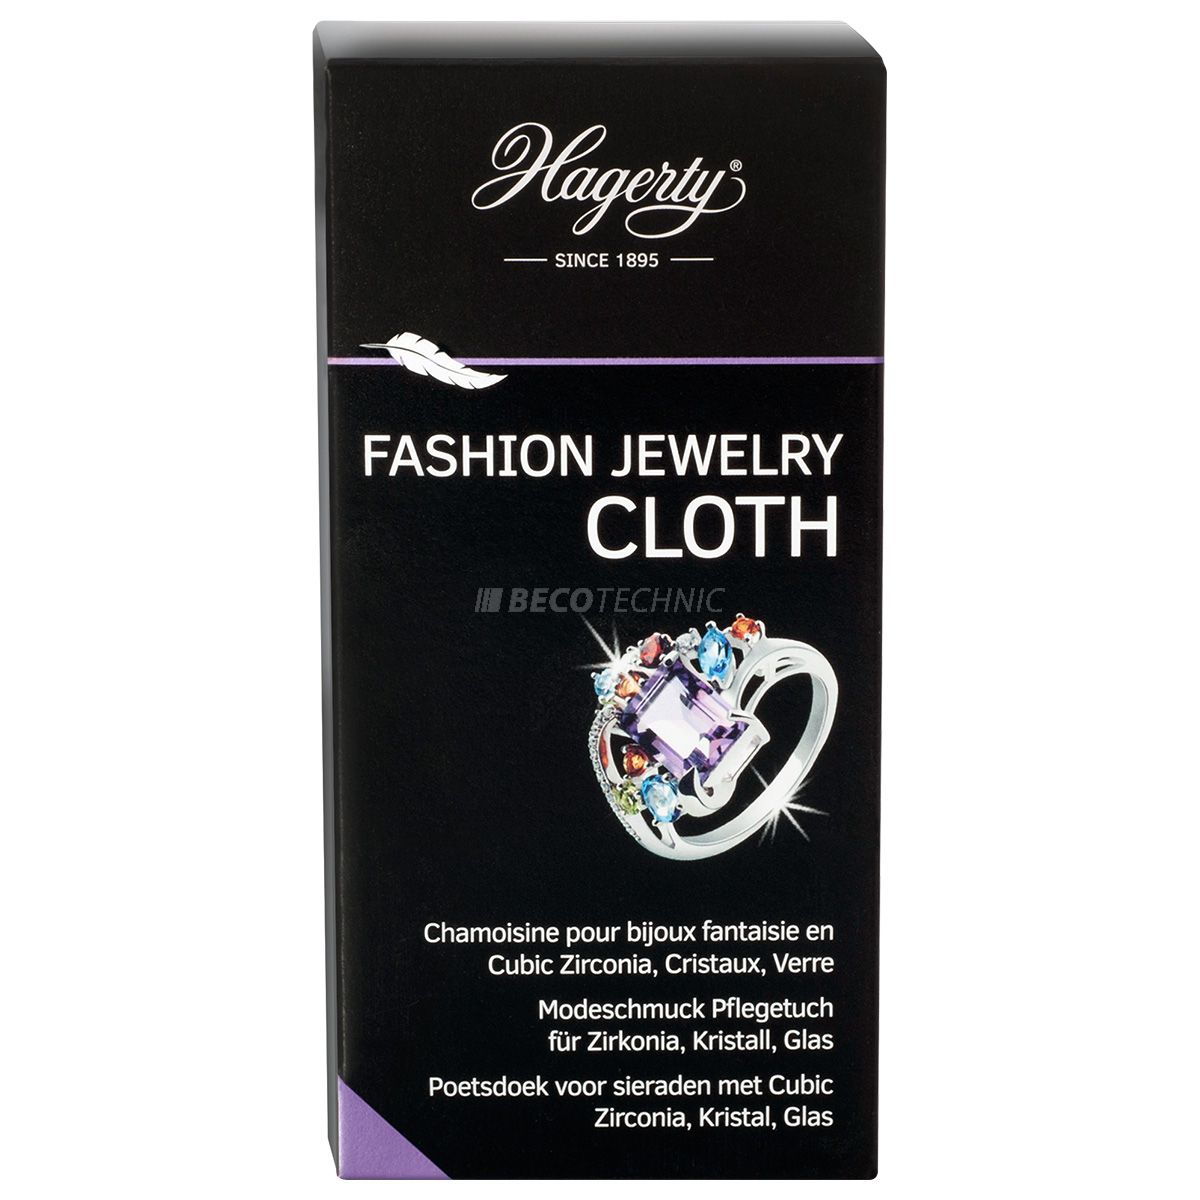 Hagerty Fashion Jewelry Cloth, Pflegetuch für Modeschmuck, 36 x 30 cm